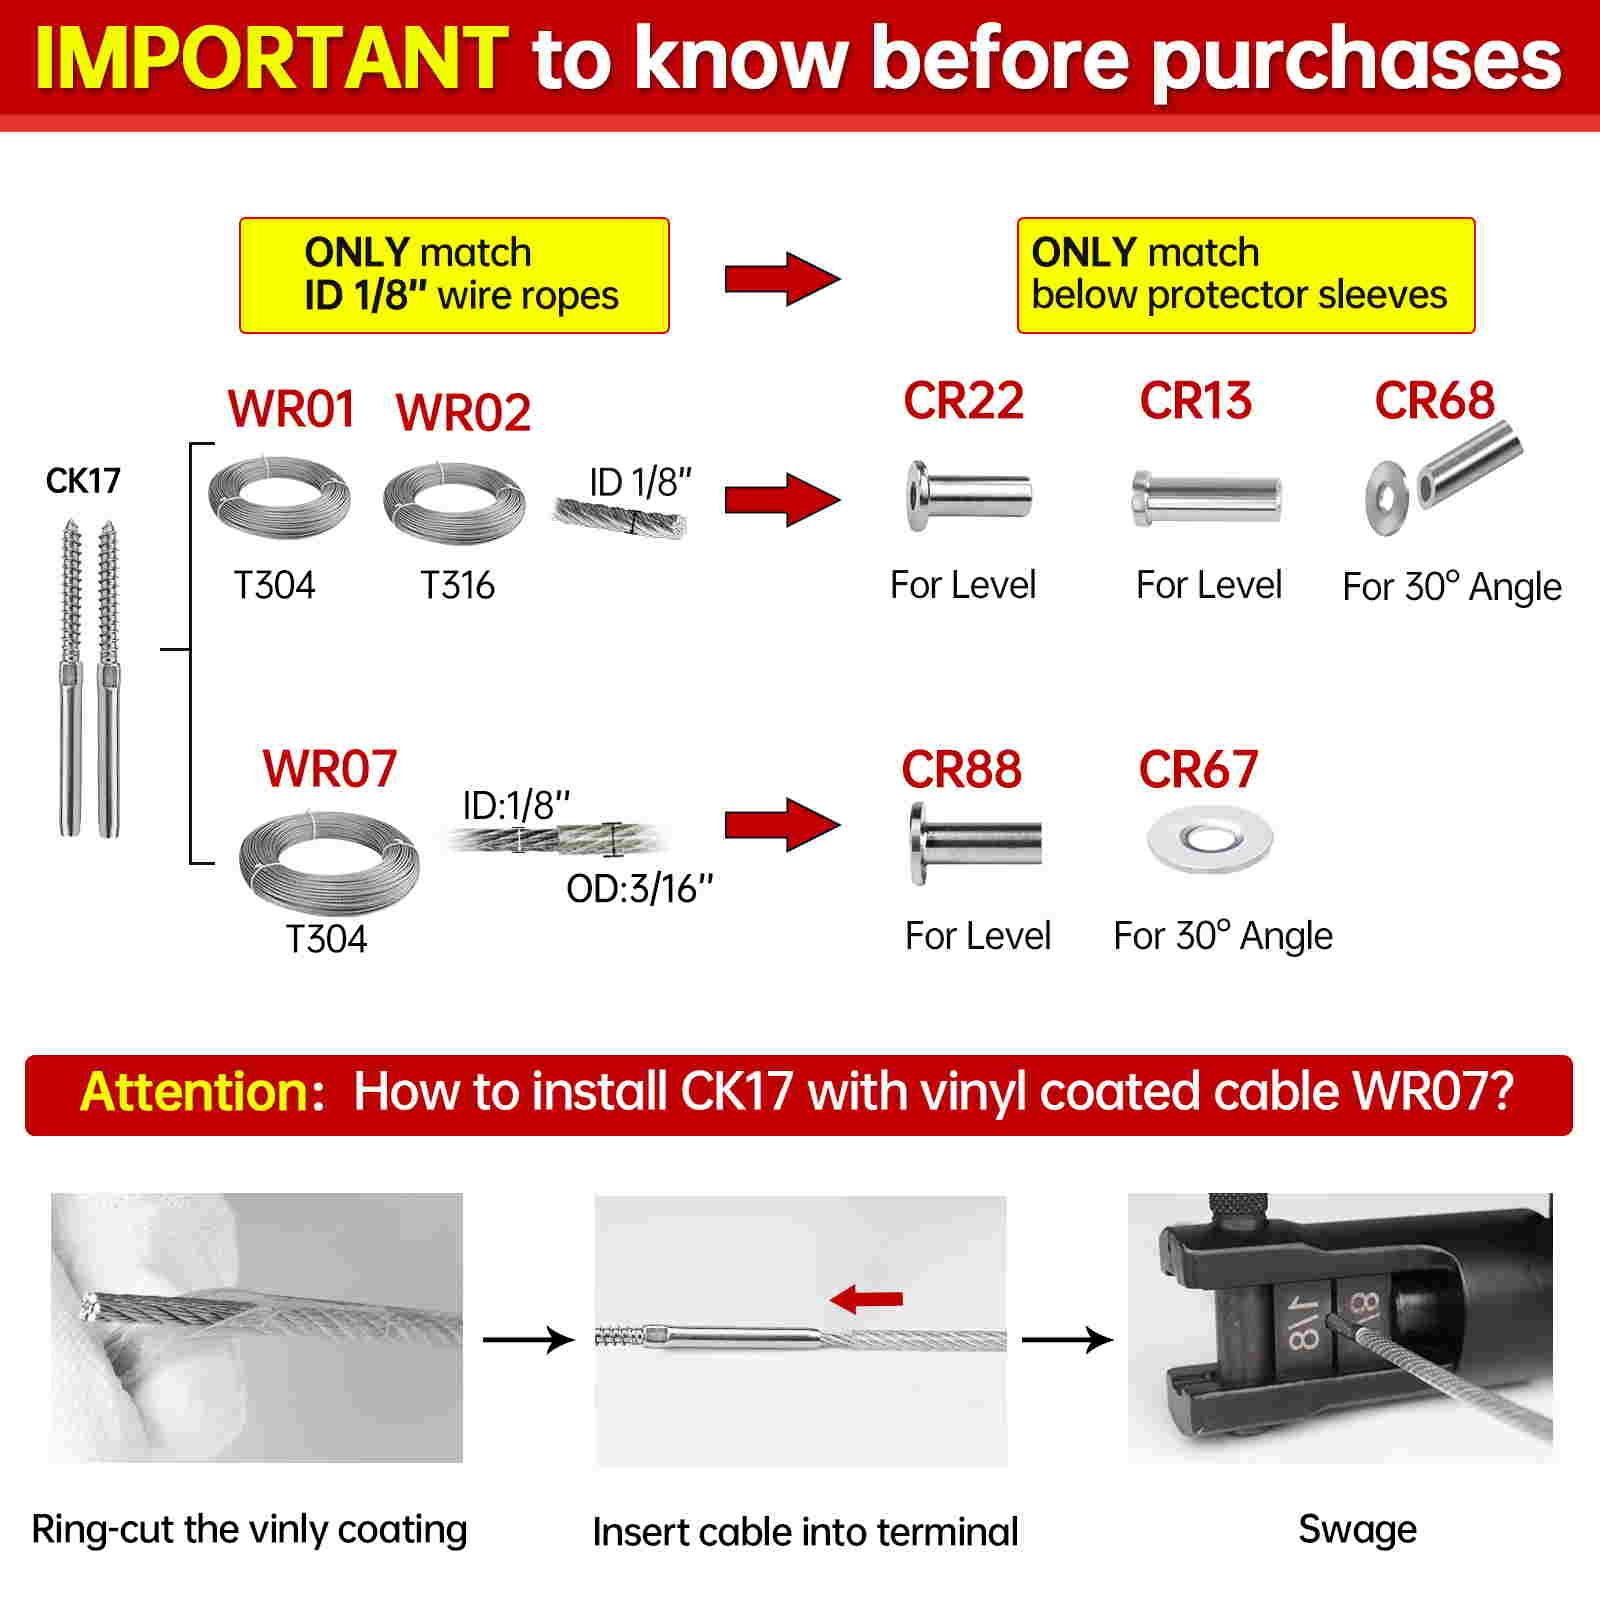 Muzata Lag Screw Left & Right Cable Railing Kit 1/8